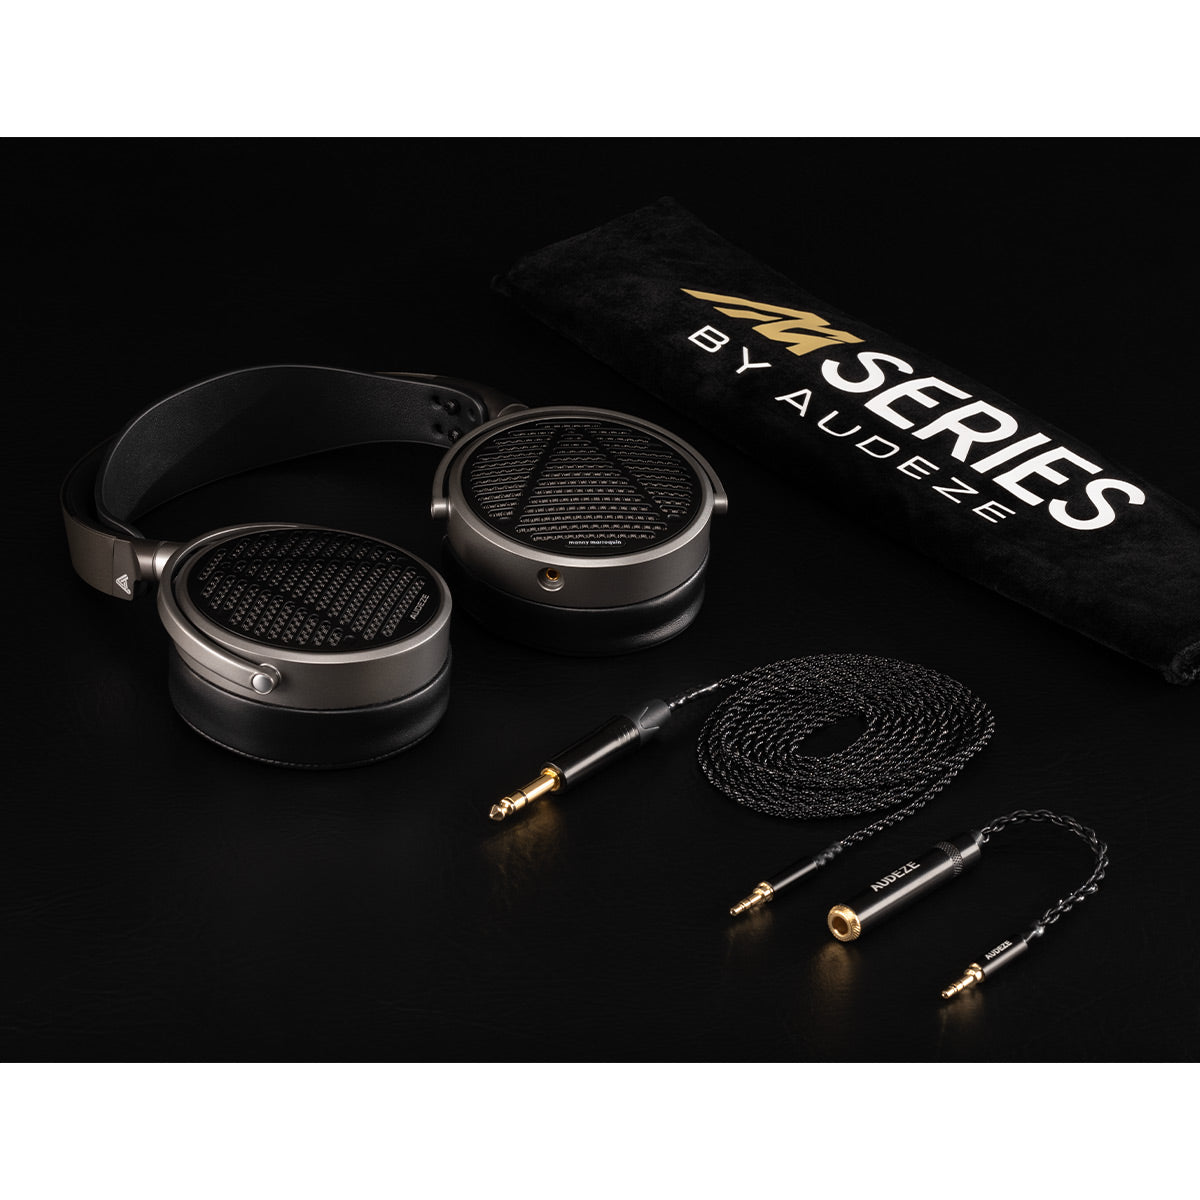 Audeze MM-100 Professional Planar Magnetic Over-Ear Open-Back Headphones